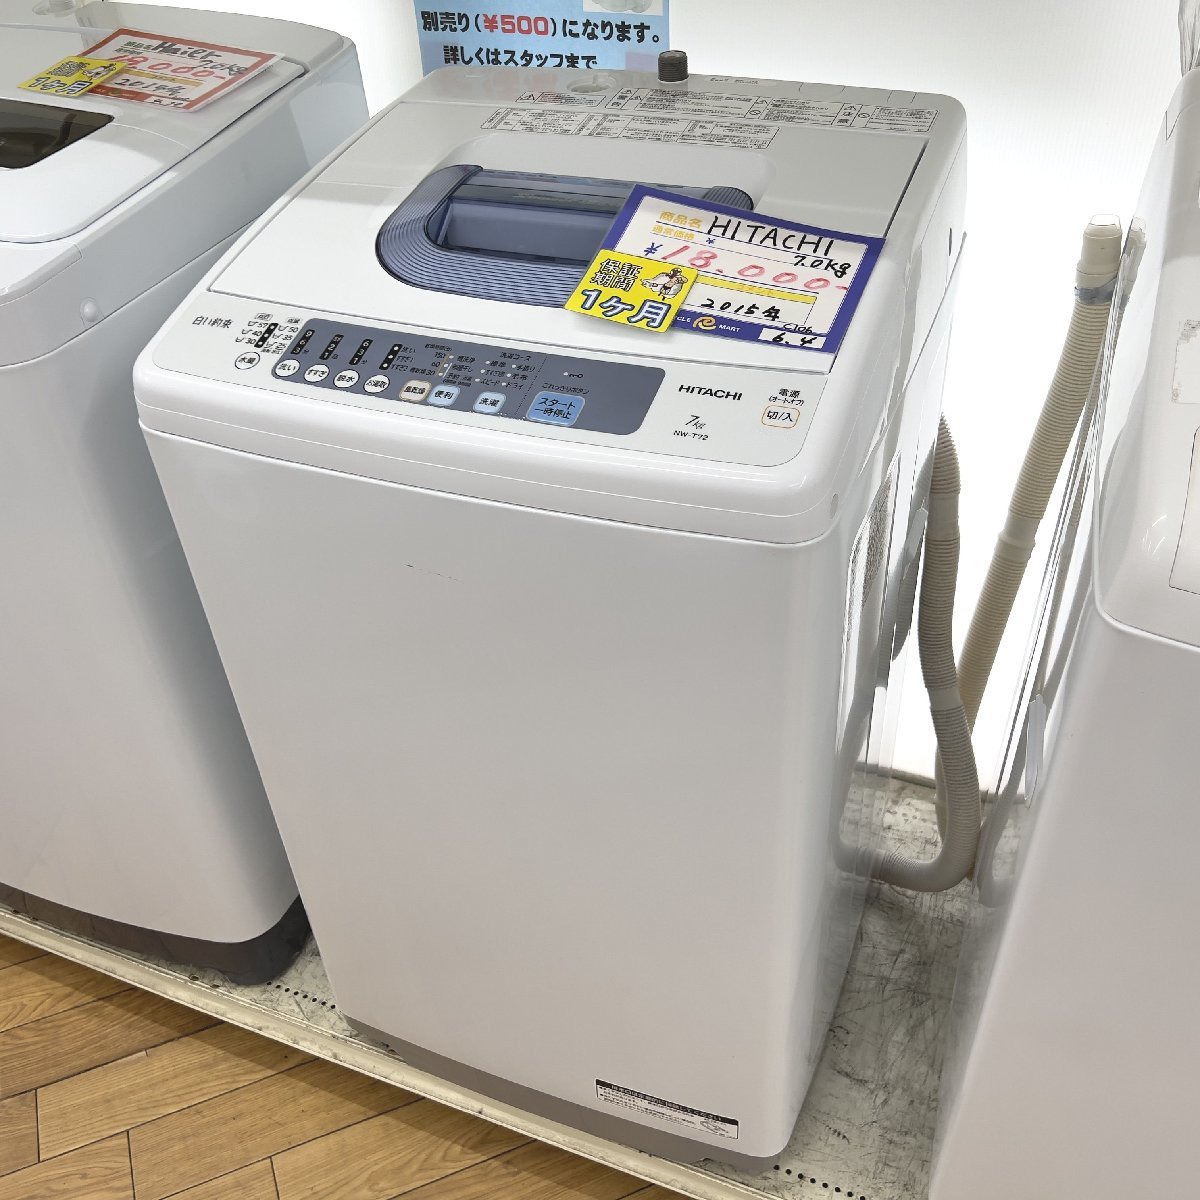 ◎C106 日立 7.0kg 全自動洗濯機 NW-T72 エアジェット乾燥